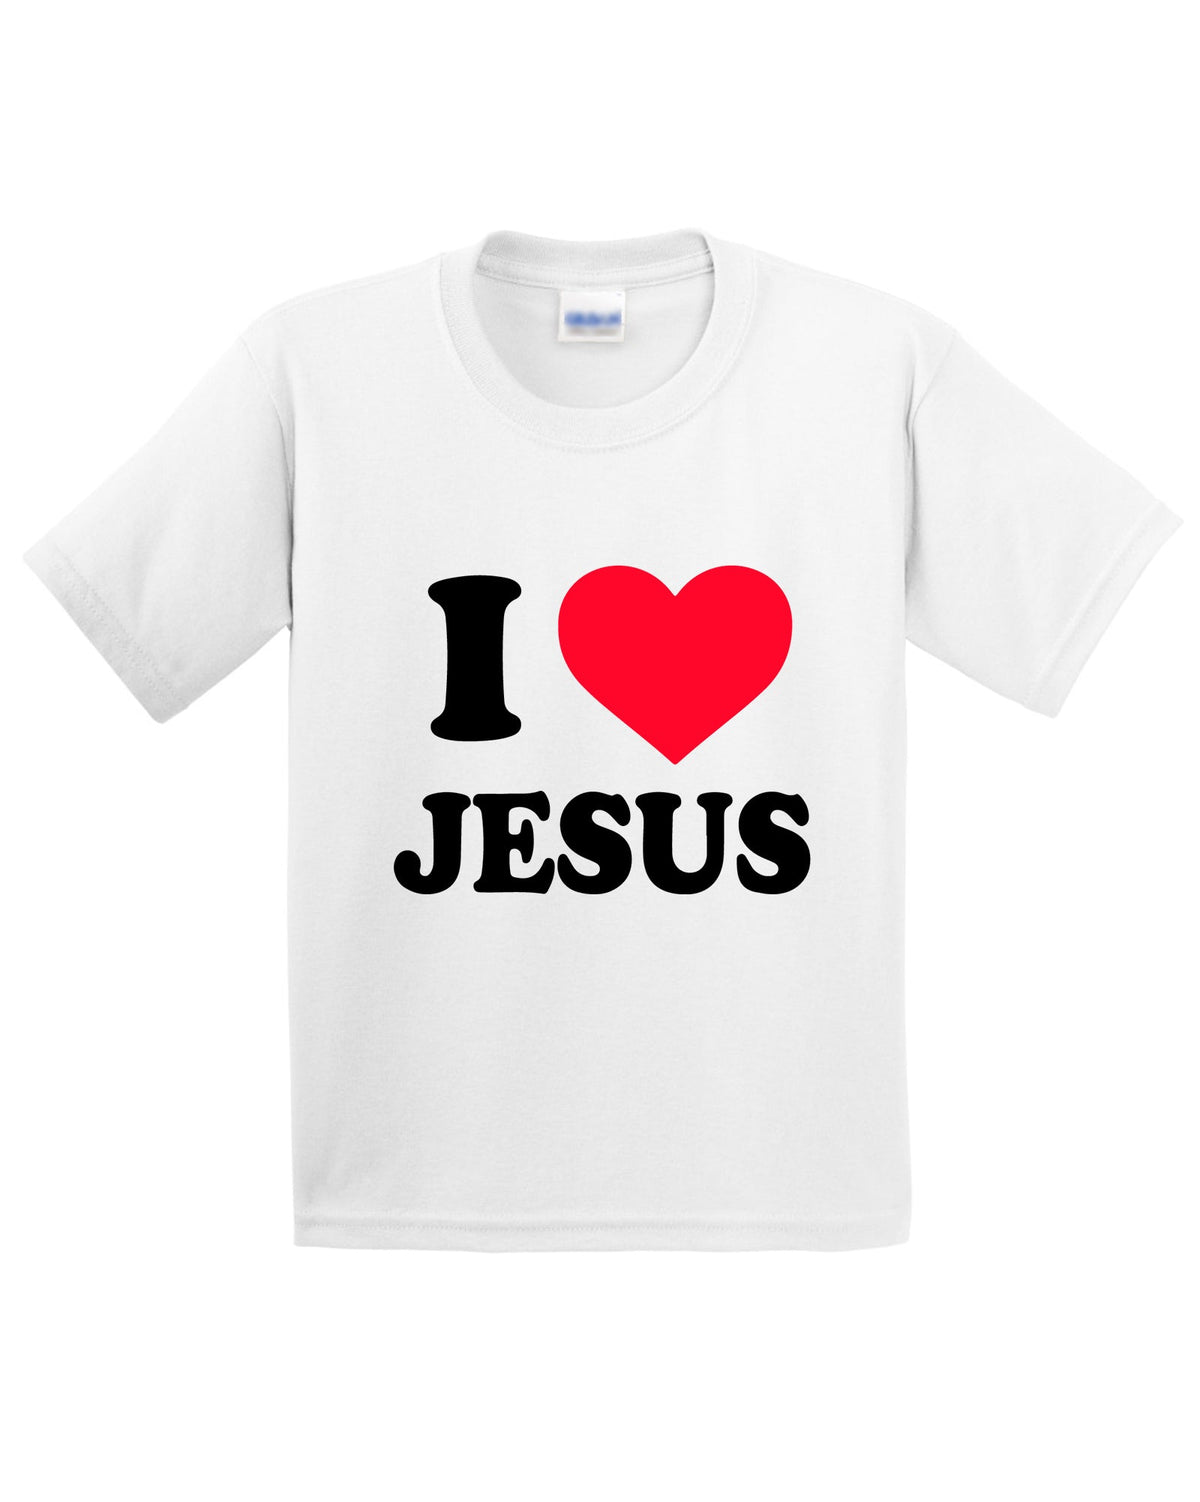 I Love jesus Kids T-Shirt